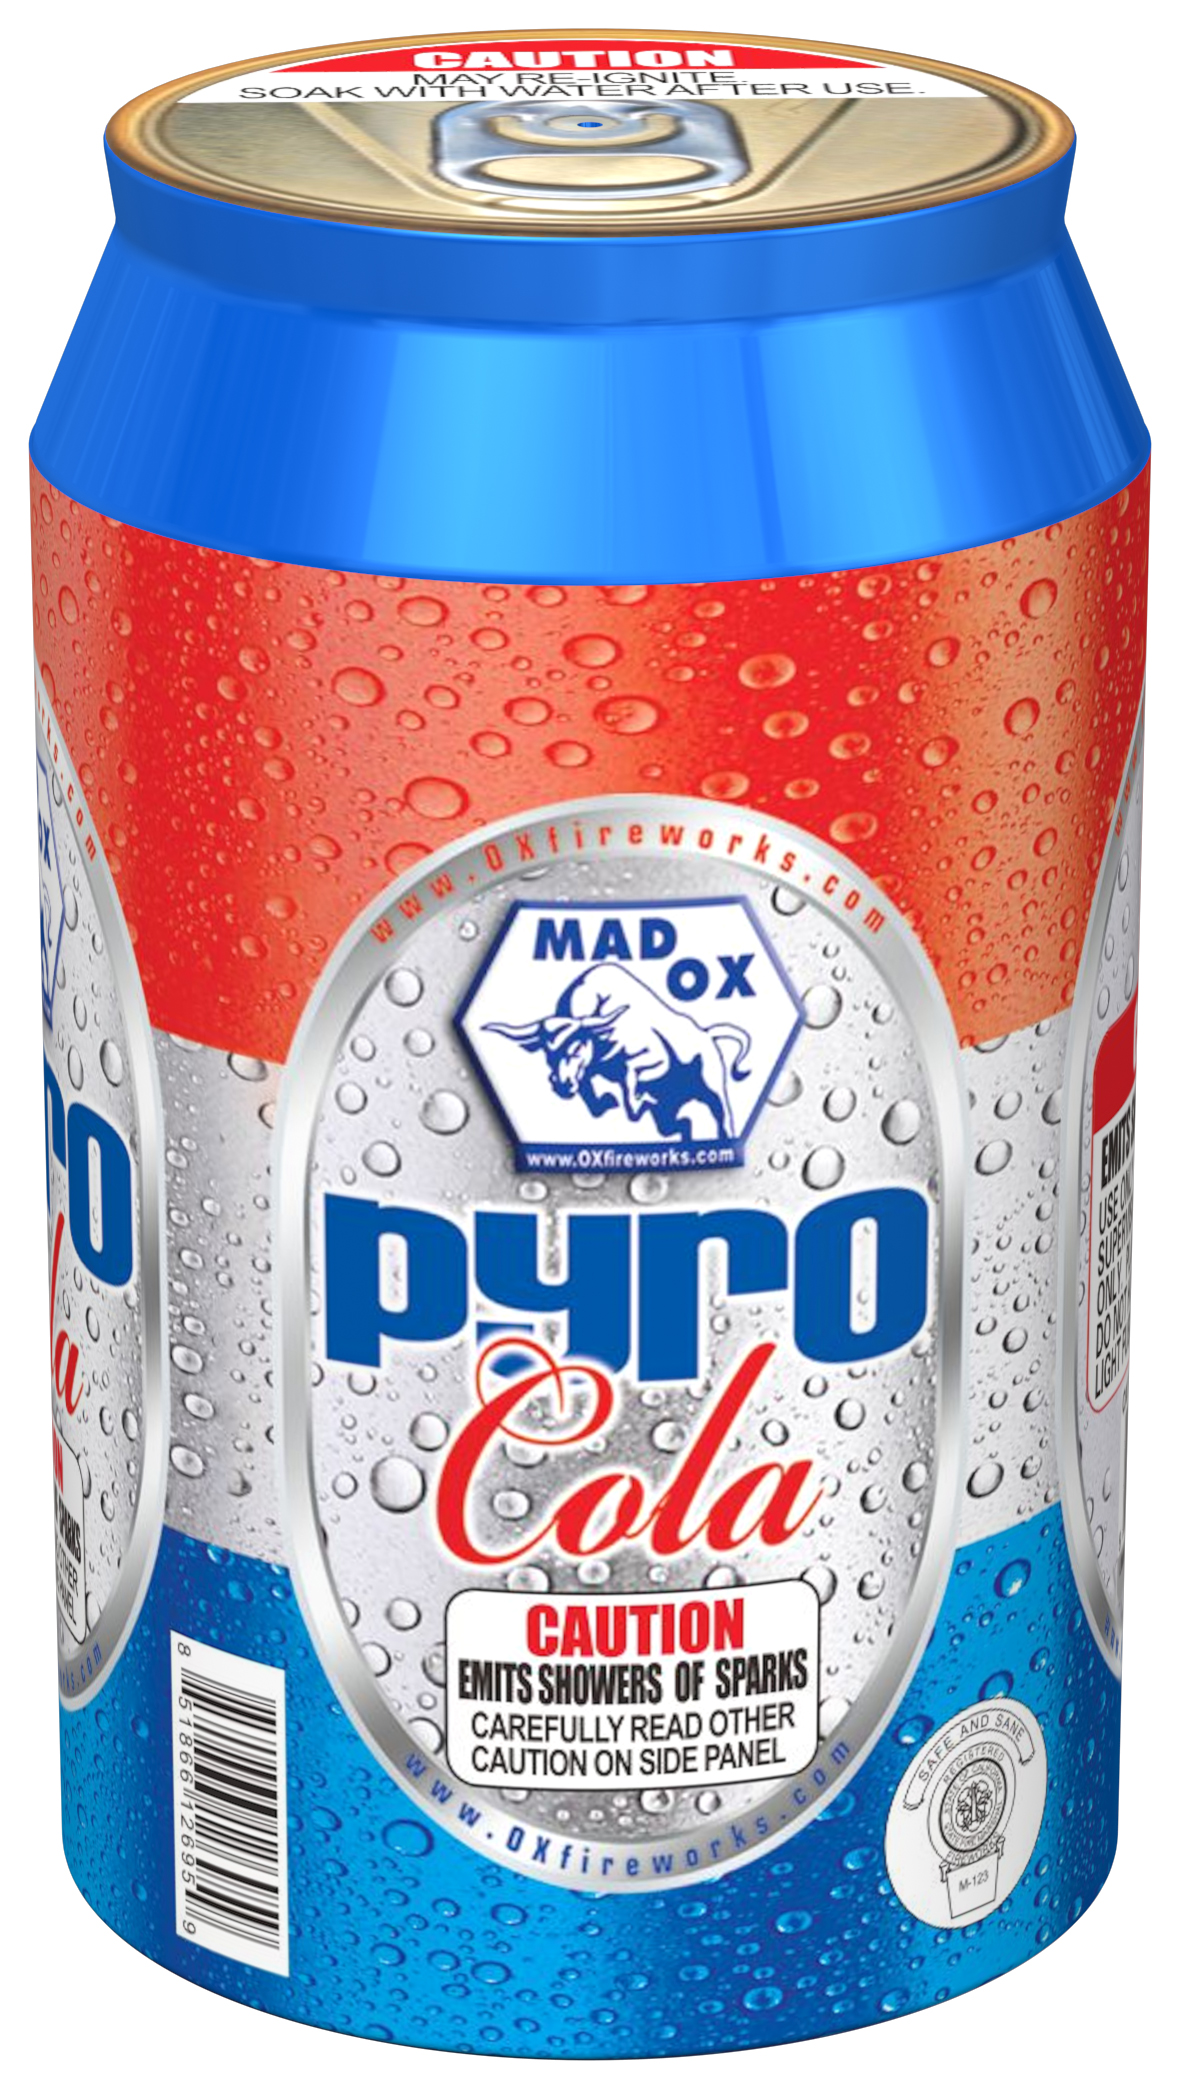 Pyro Cola